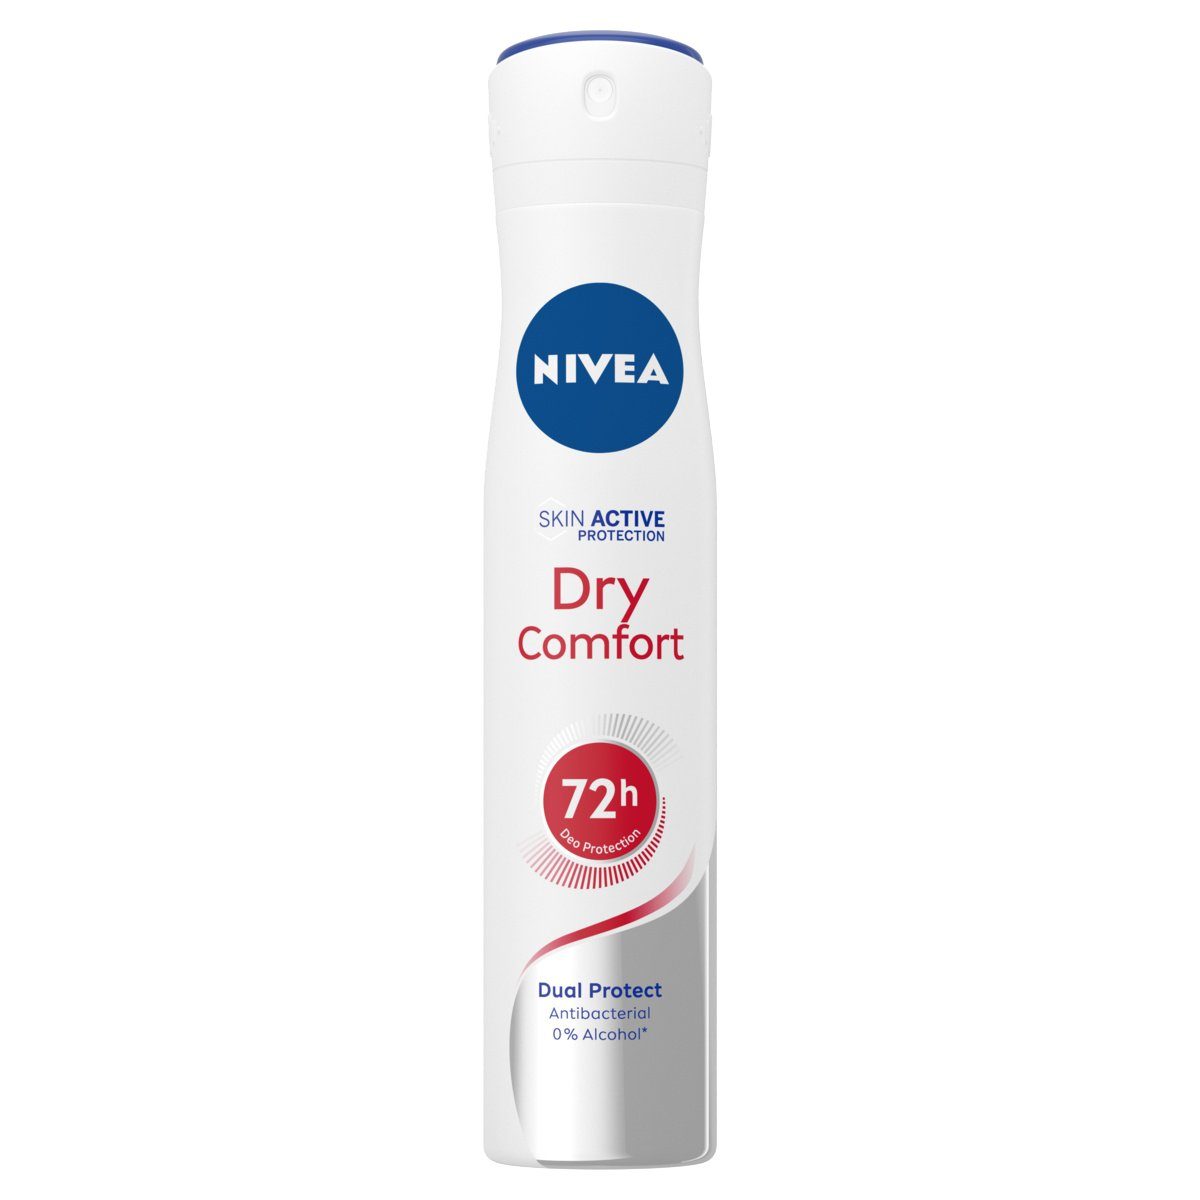 Nivea Dry comfort deodorant Flacon cl dekweker.nl